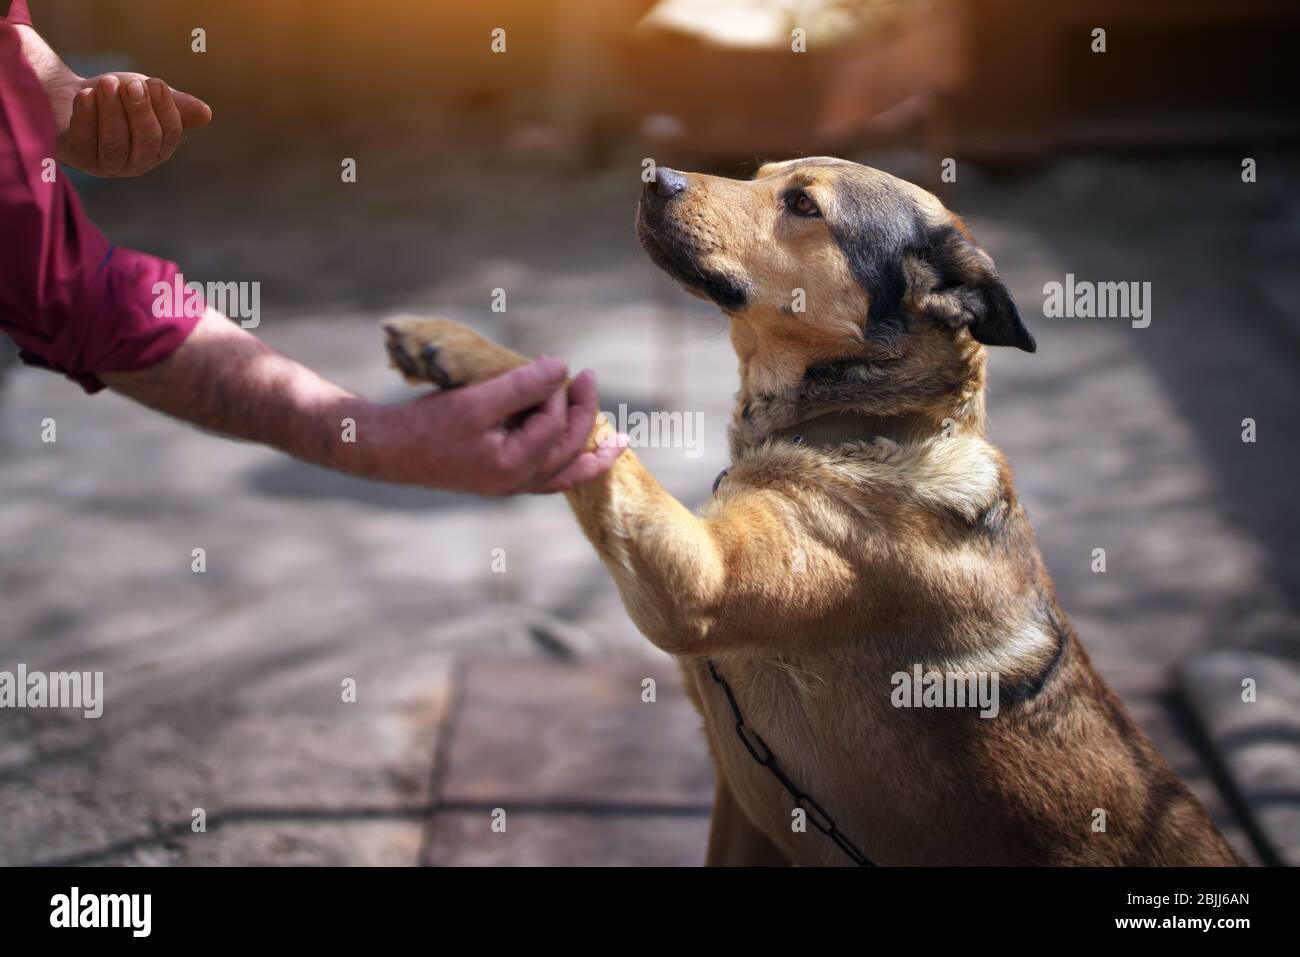 dog and man. friendly handshake Stock Photo